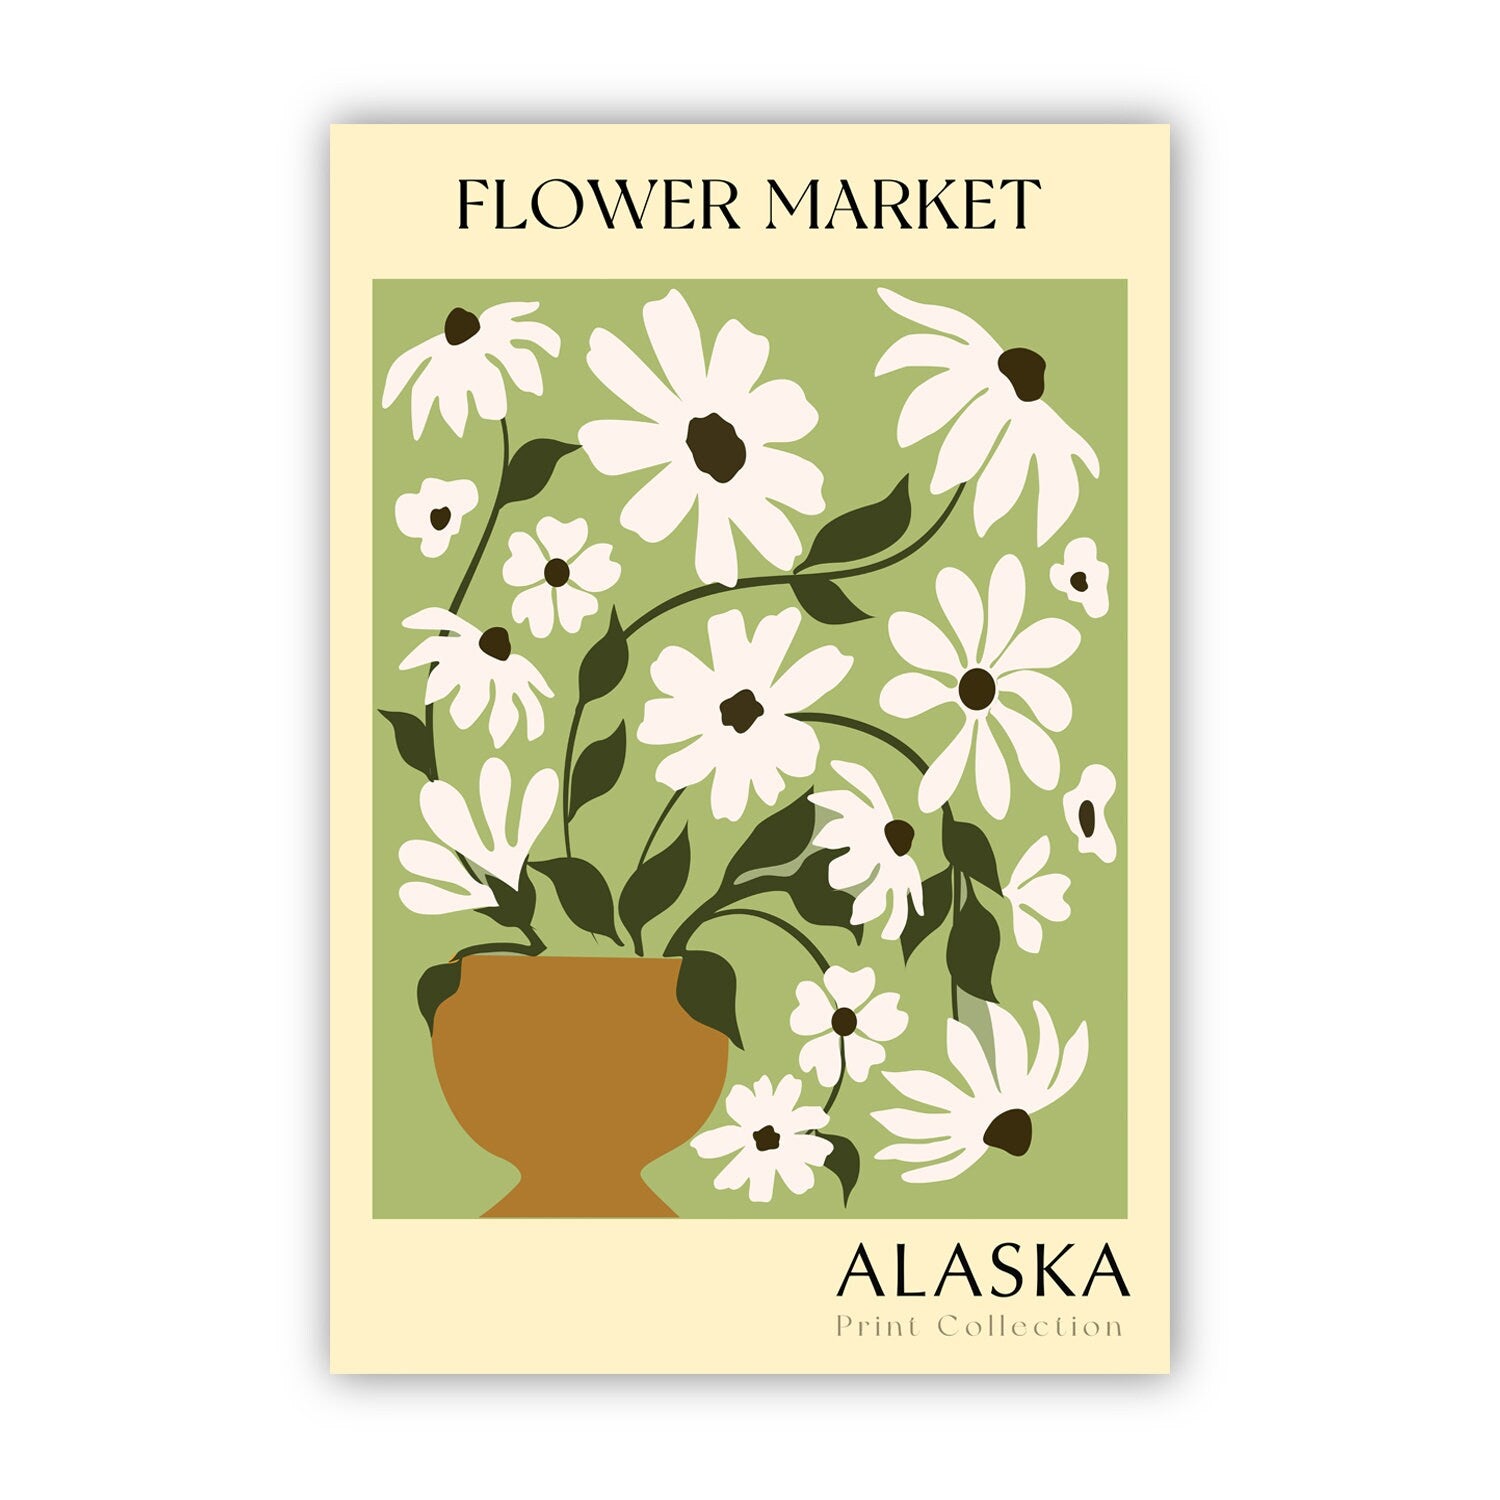 Alaska State flower print, USA states poster, Alaska flower market poster, Botanical posters, Natural poster artwork, Boho floral wall art